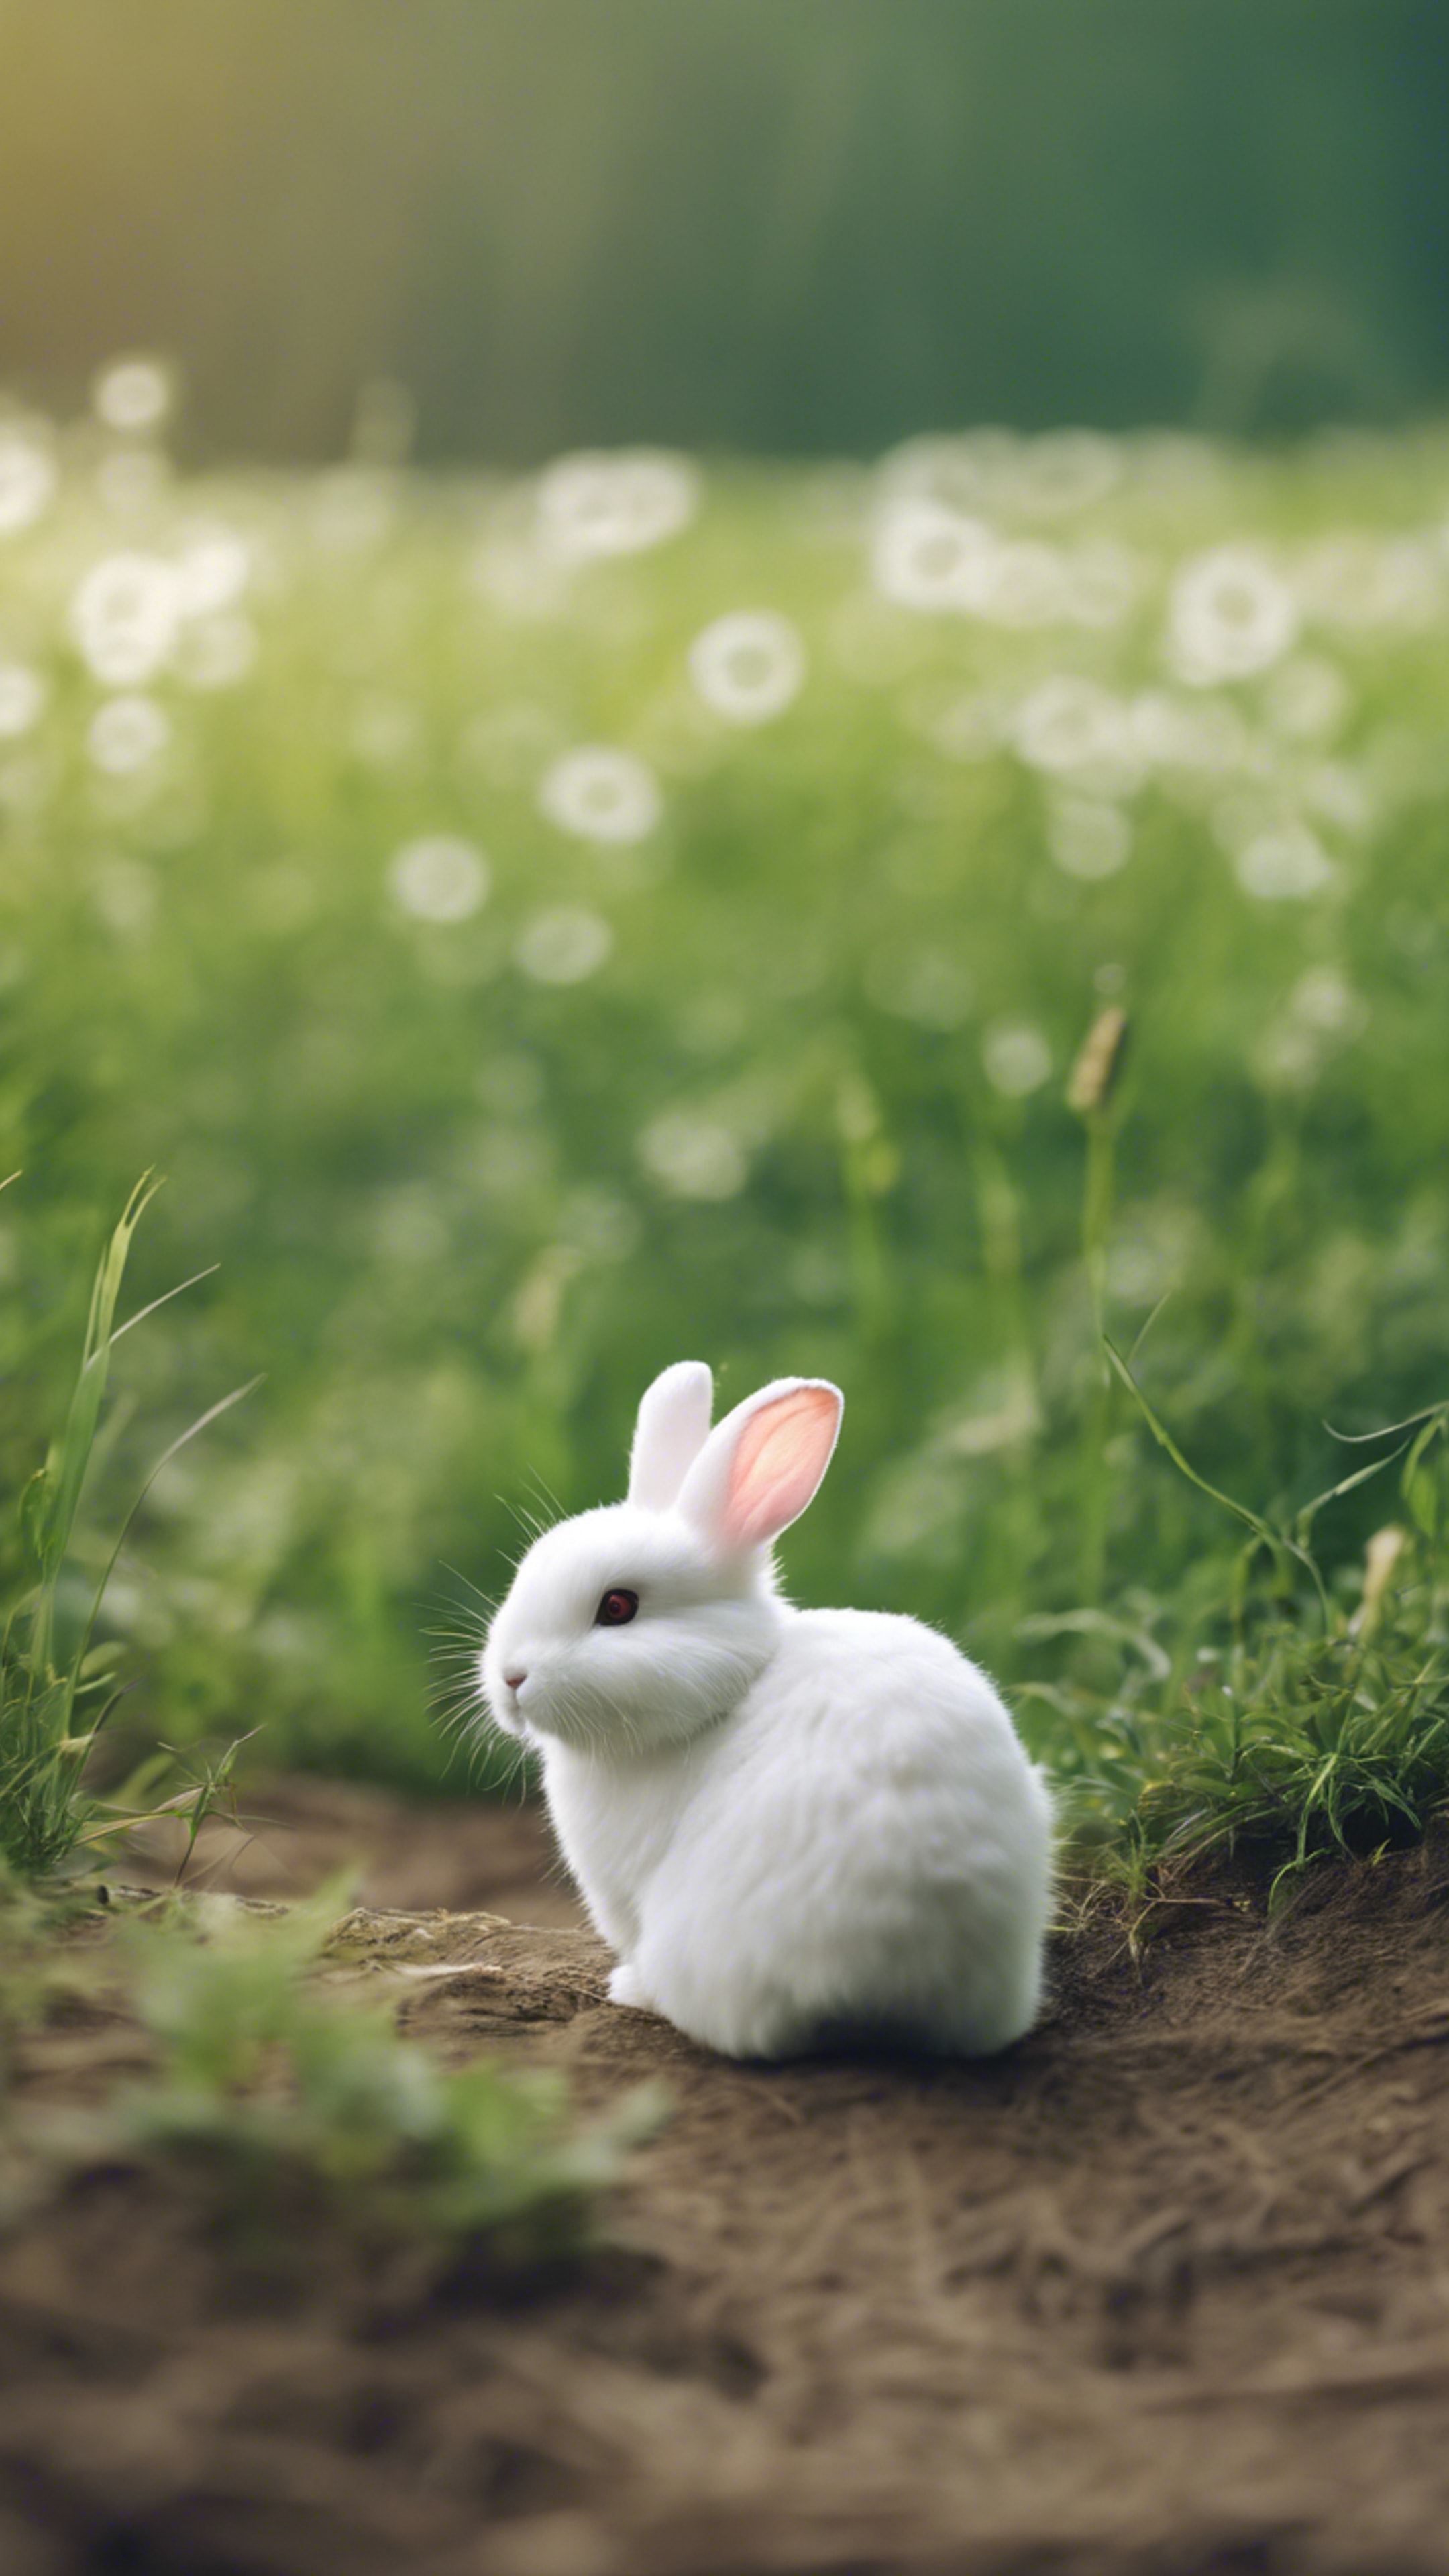 A kawaii white rabbit on a green field, fluffy tail flickering in the wind. Tapeta[1912d35368704584b61e]